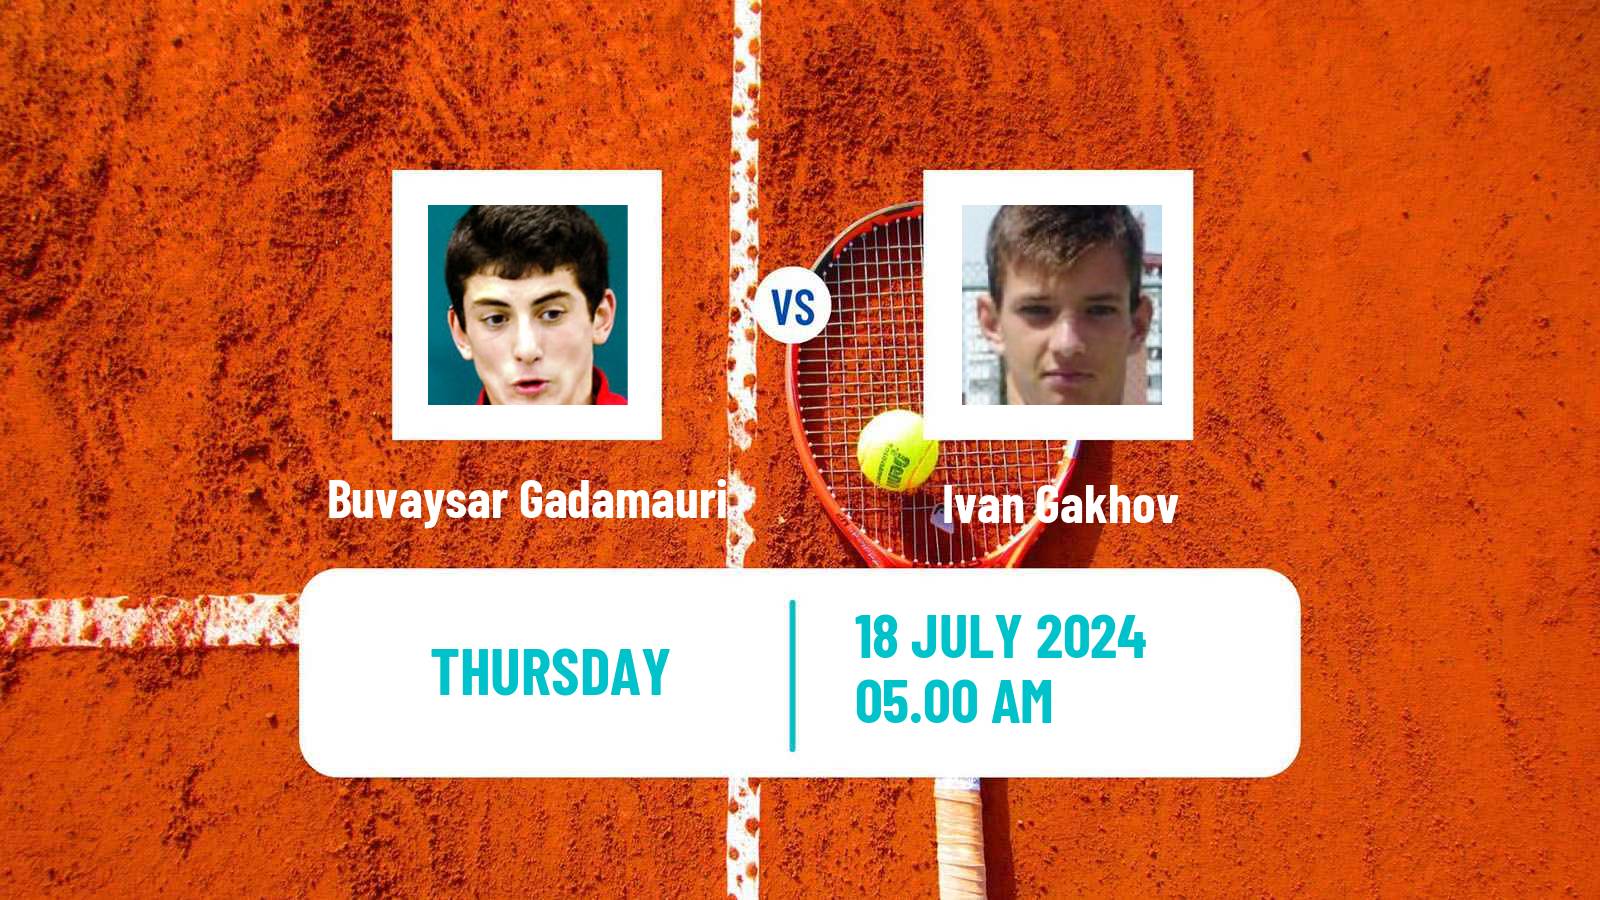 Tennis ITF M25 Esch Alzette 2 Men Buvaysar Gadamauri - Ivan Gakhov